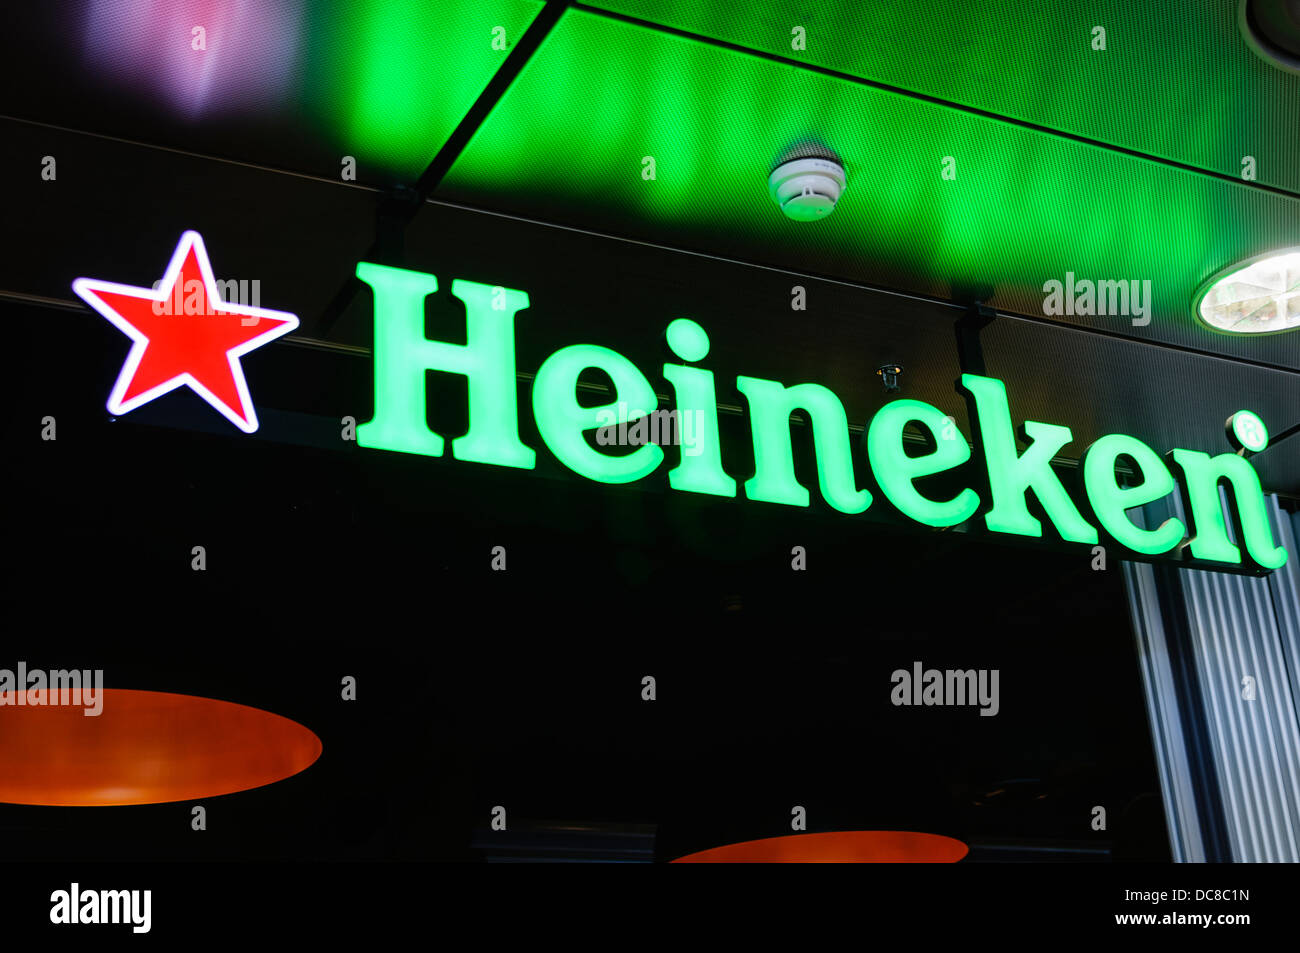 Illuminated sign for Heineken beer Stock Photo